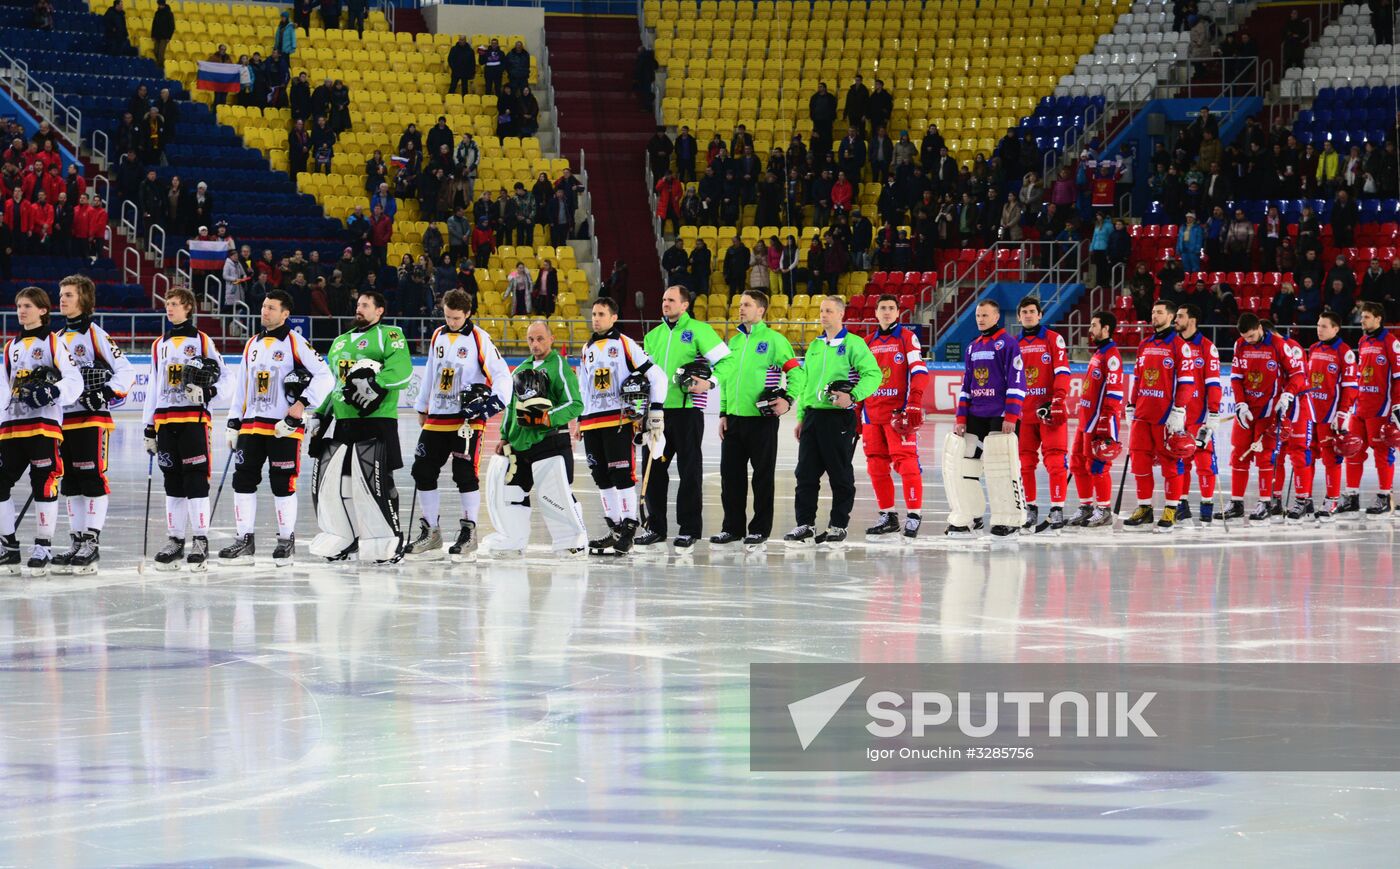 2018 Bandy World Championship. Russia vs. Germany